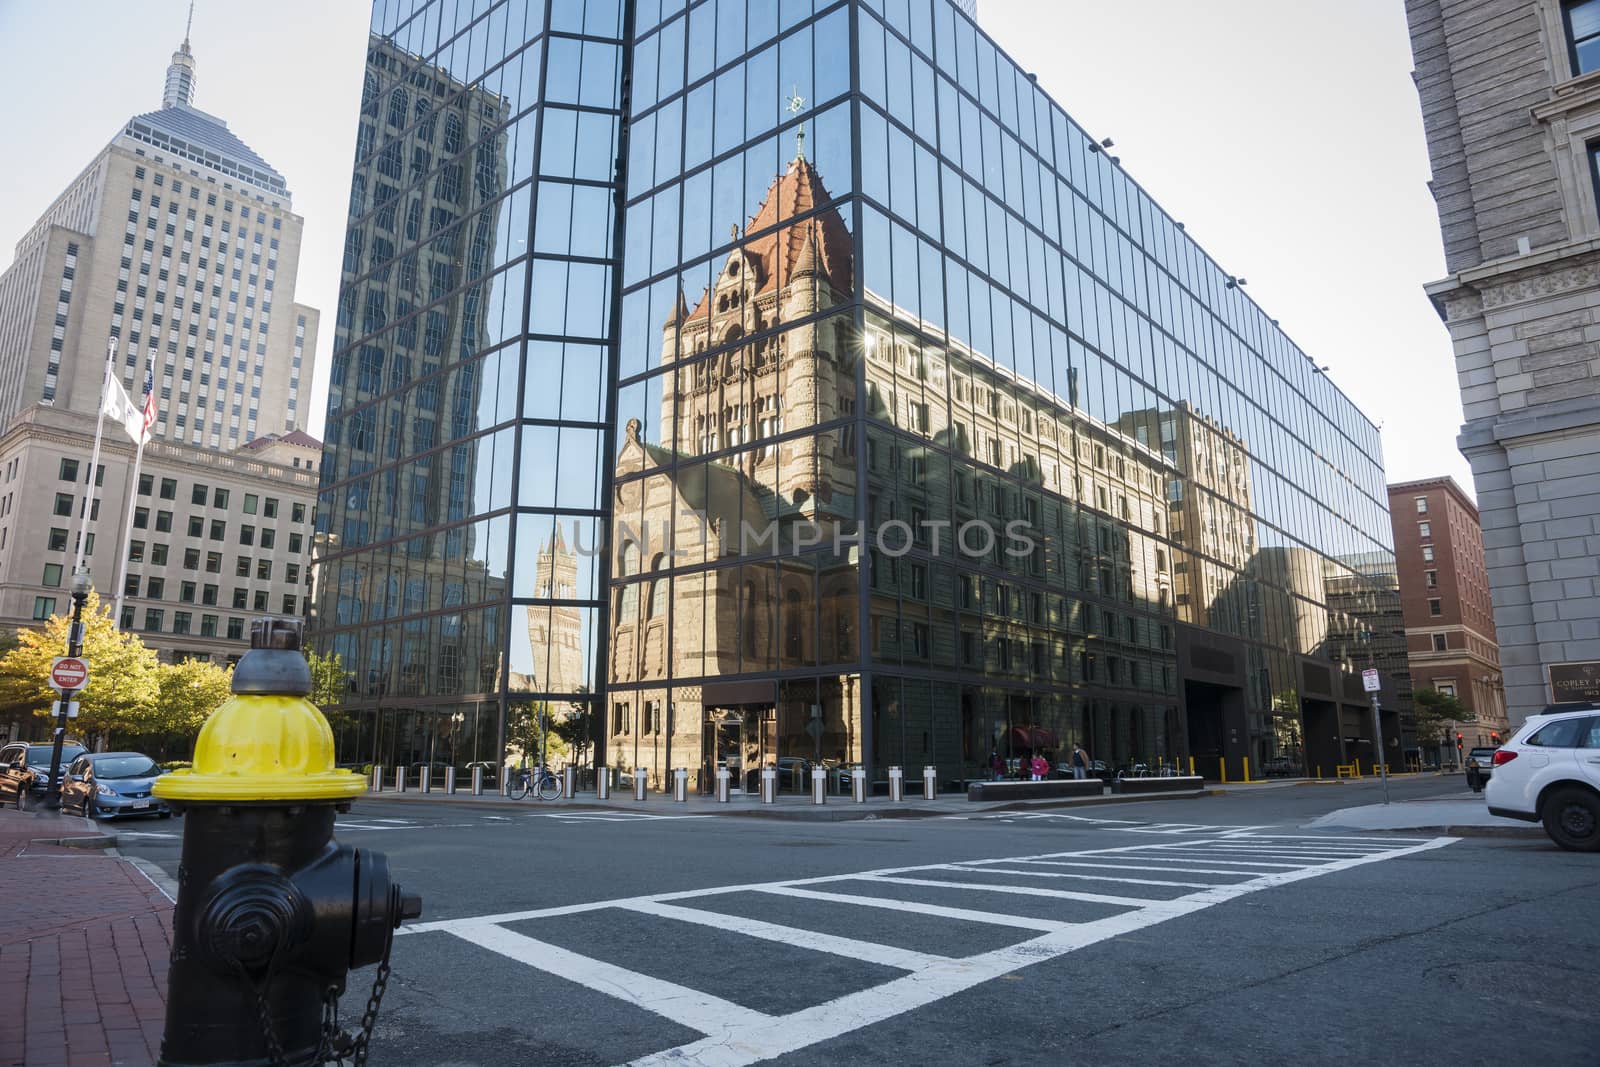 Urban mirror image, Victorian style brick building reflected in mirror glass facade of modern Boston building.